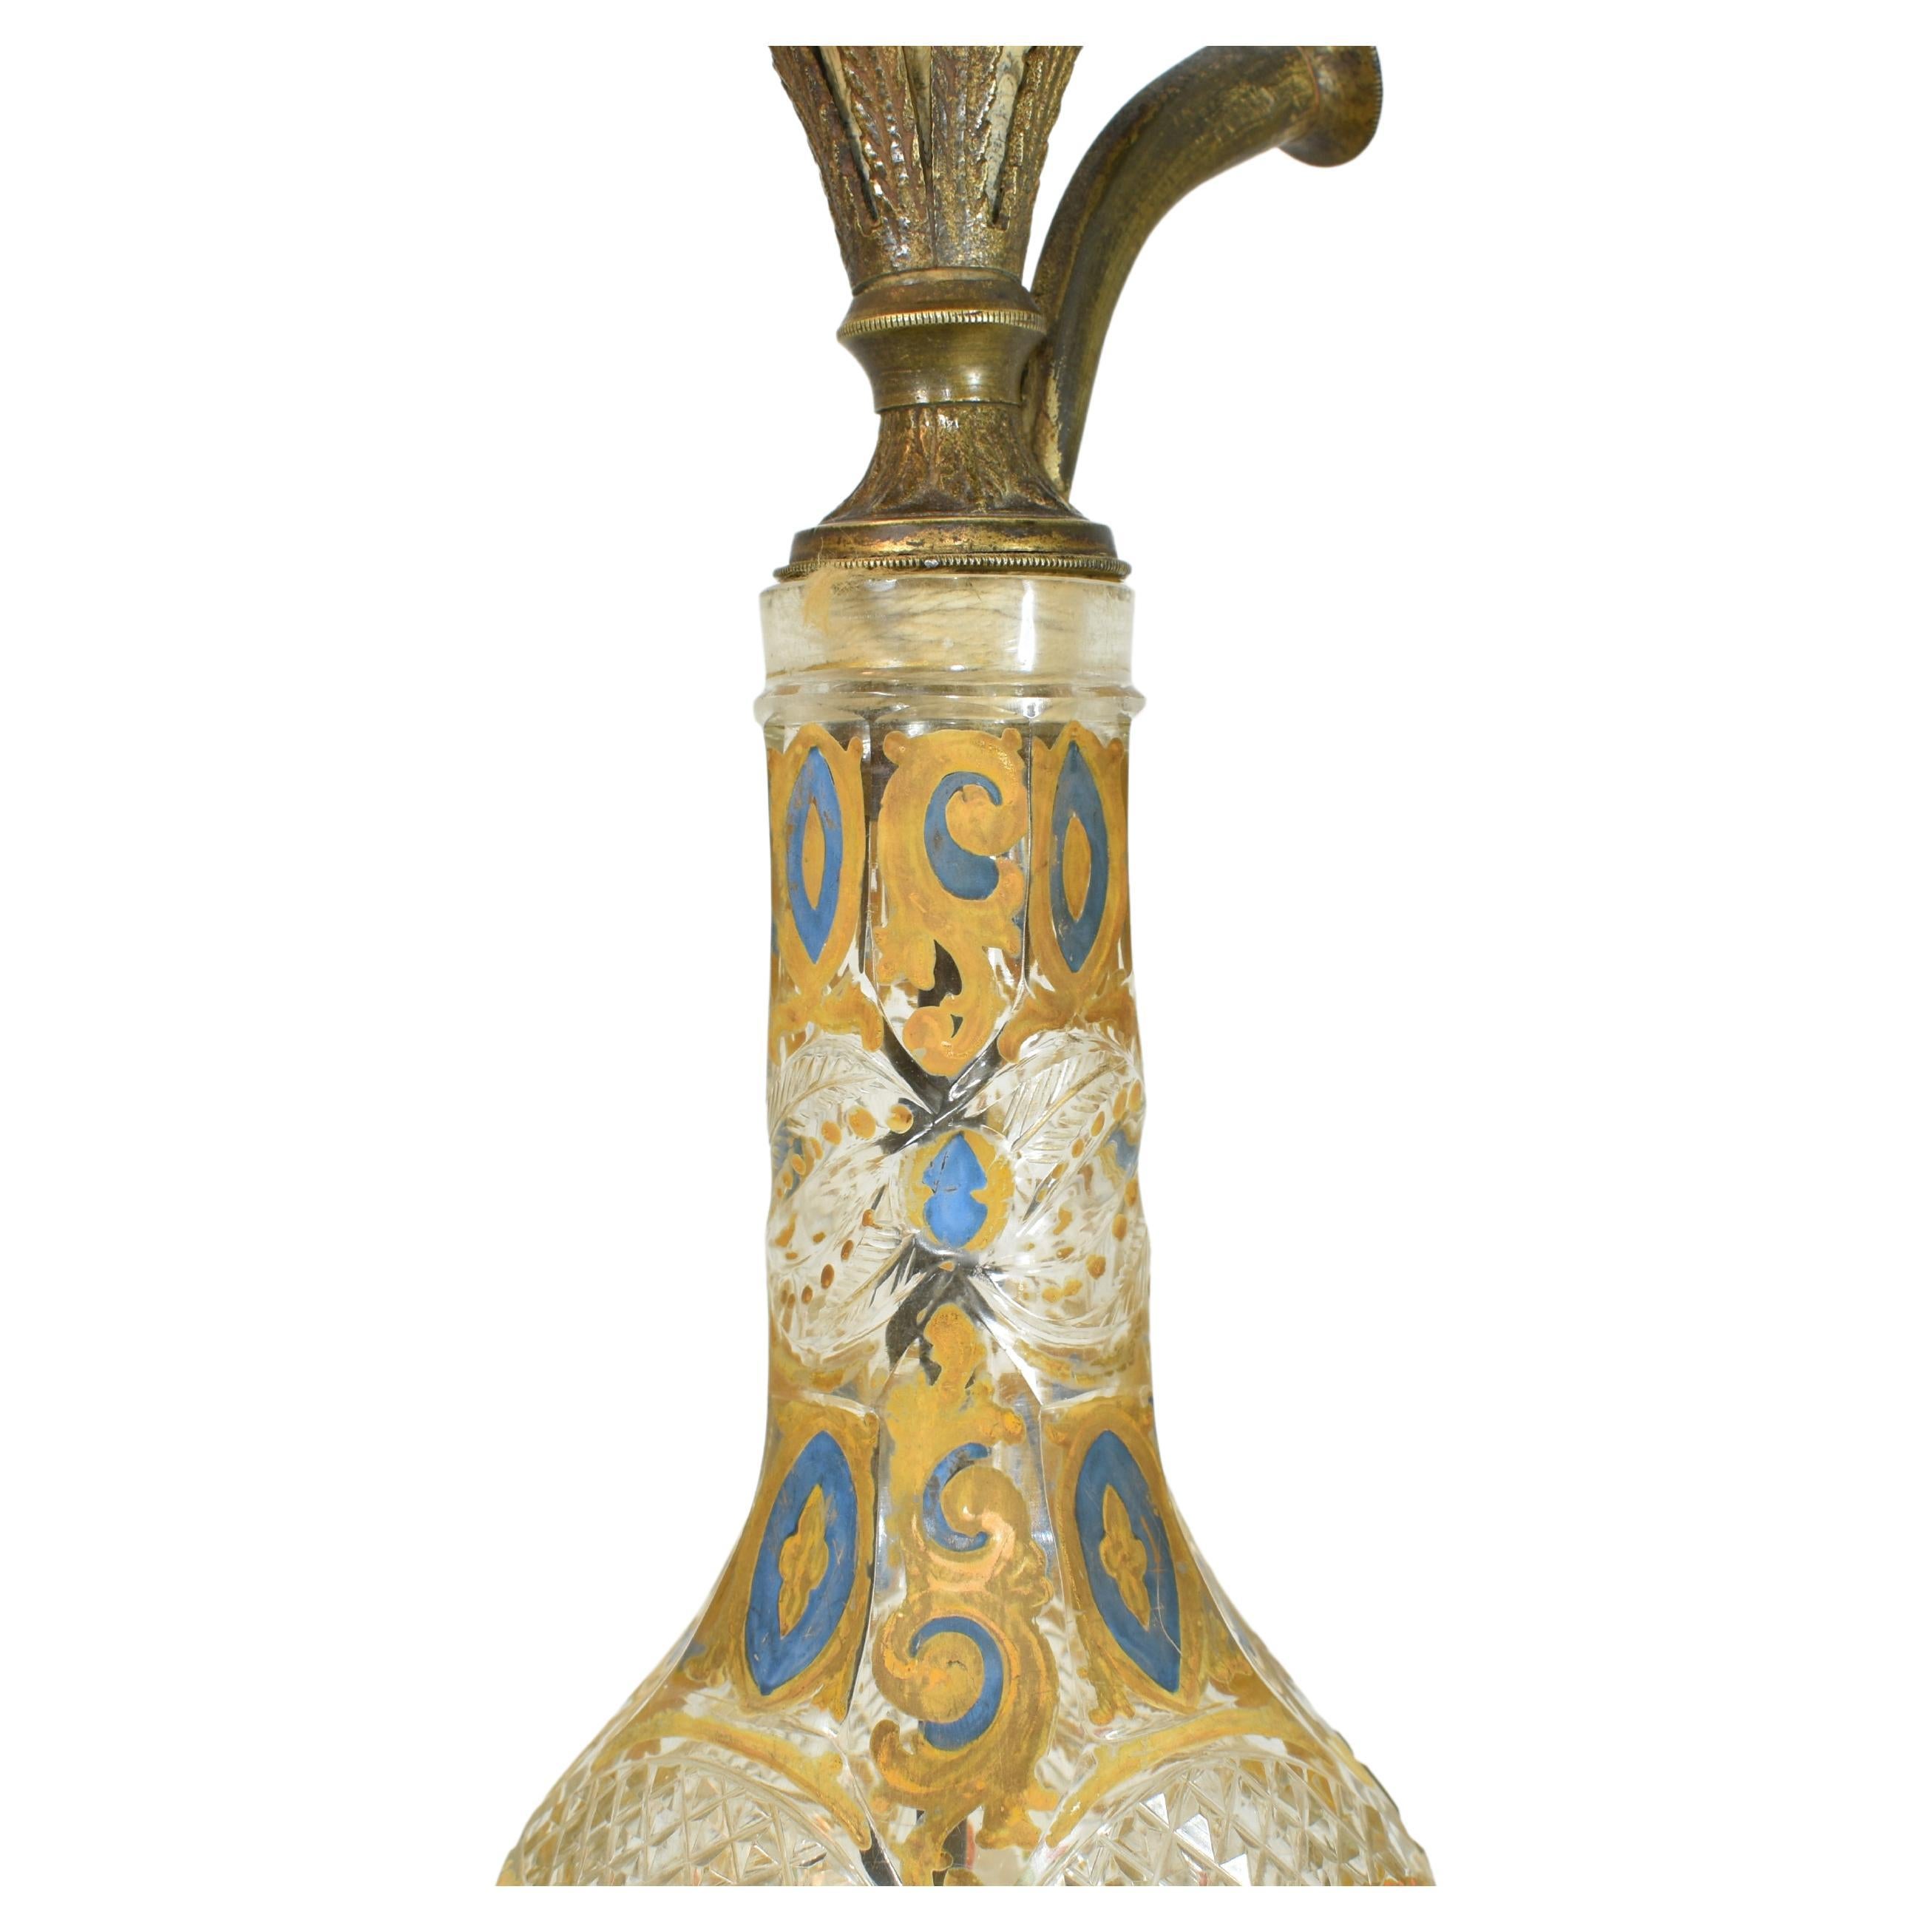 Czech Antique Enamelled Cut-Glass Hookah and Plate, Bohemian for Ottoman Market 19th C For Sale